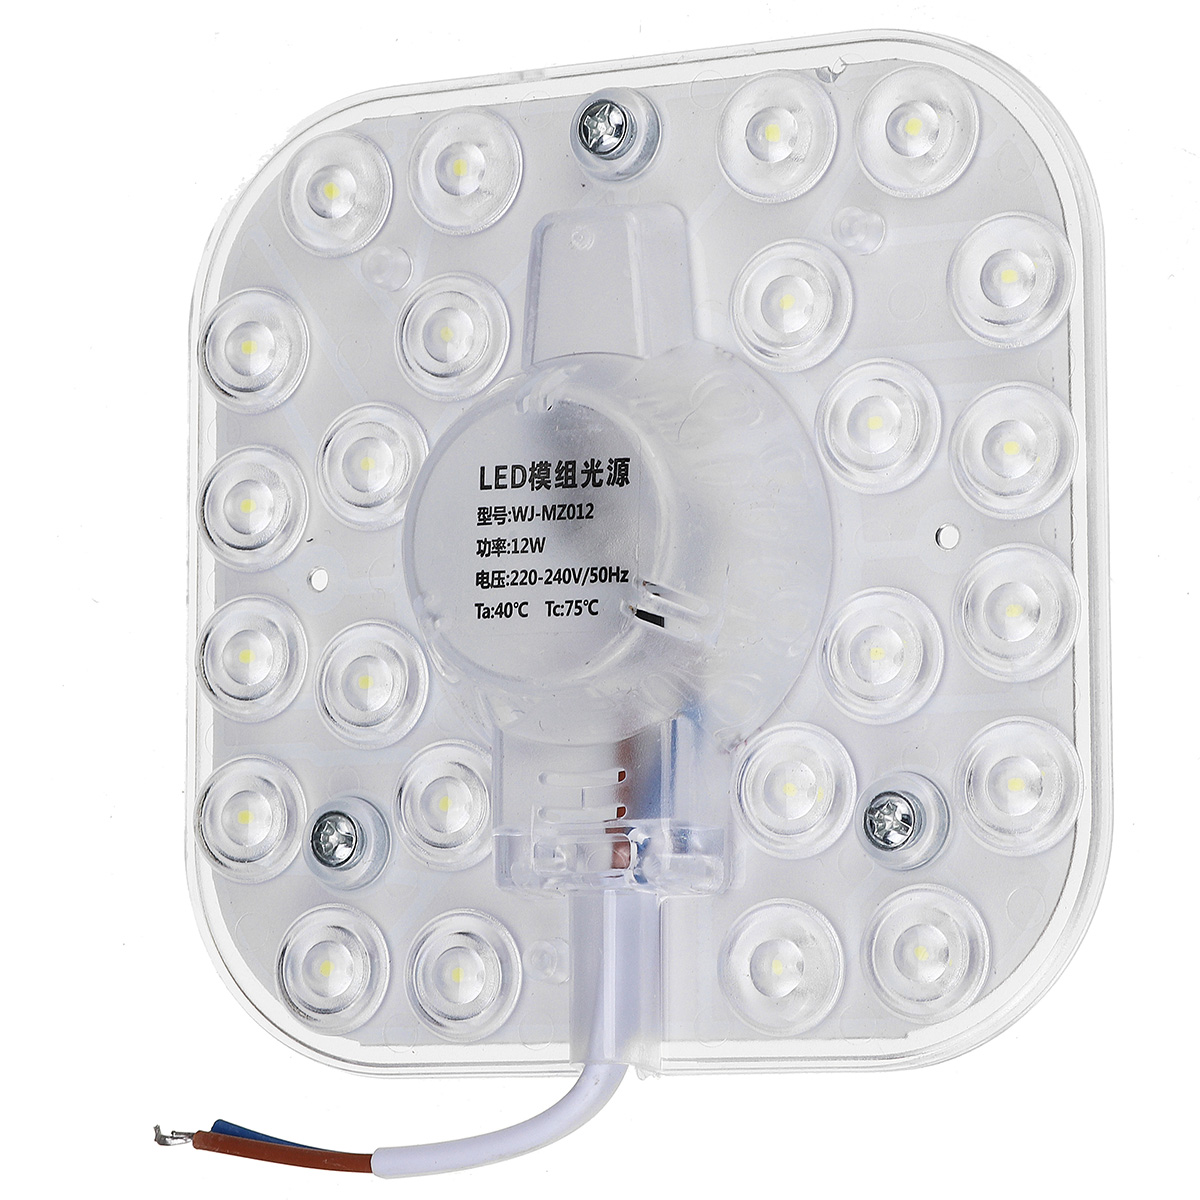 LED-Module-Lamp-Source-Ceiling-Light-Transformation-Light-Board-Square-light-1698731-6